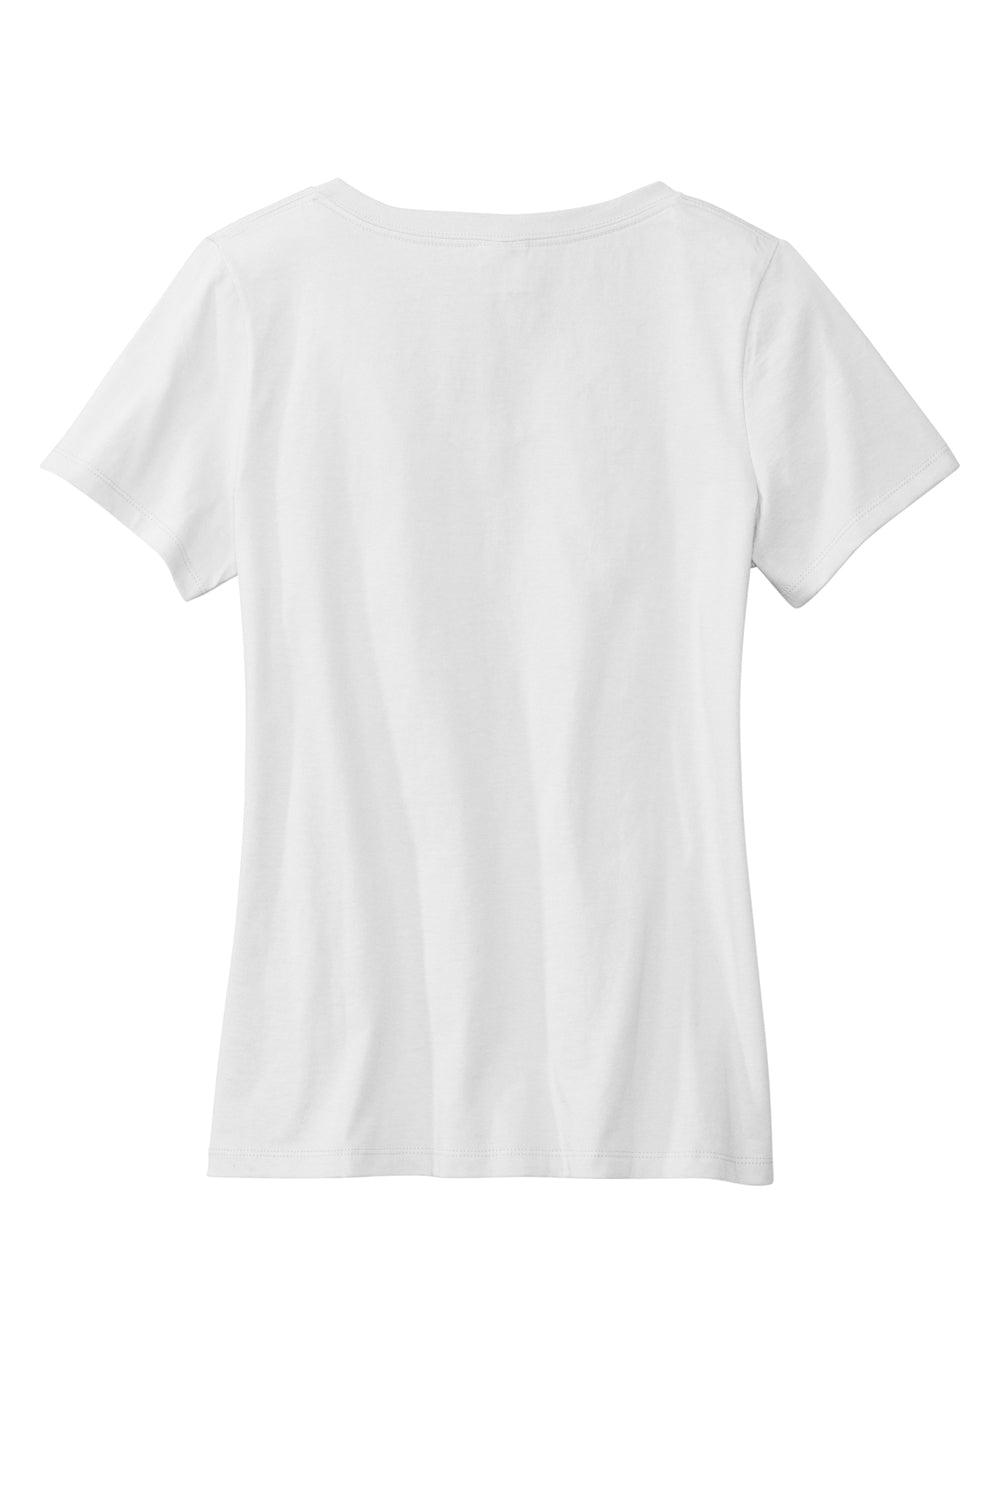 Volunteer Knitwear LVL45V USA Made Daily Short Sleeve V-Neck T-Shirt White Flat Back